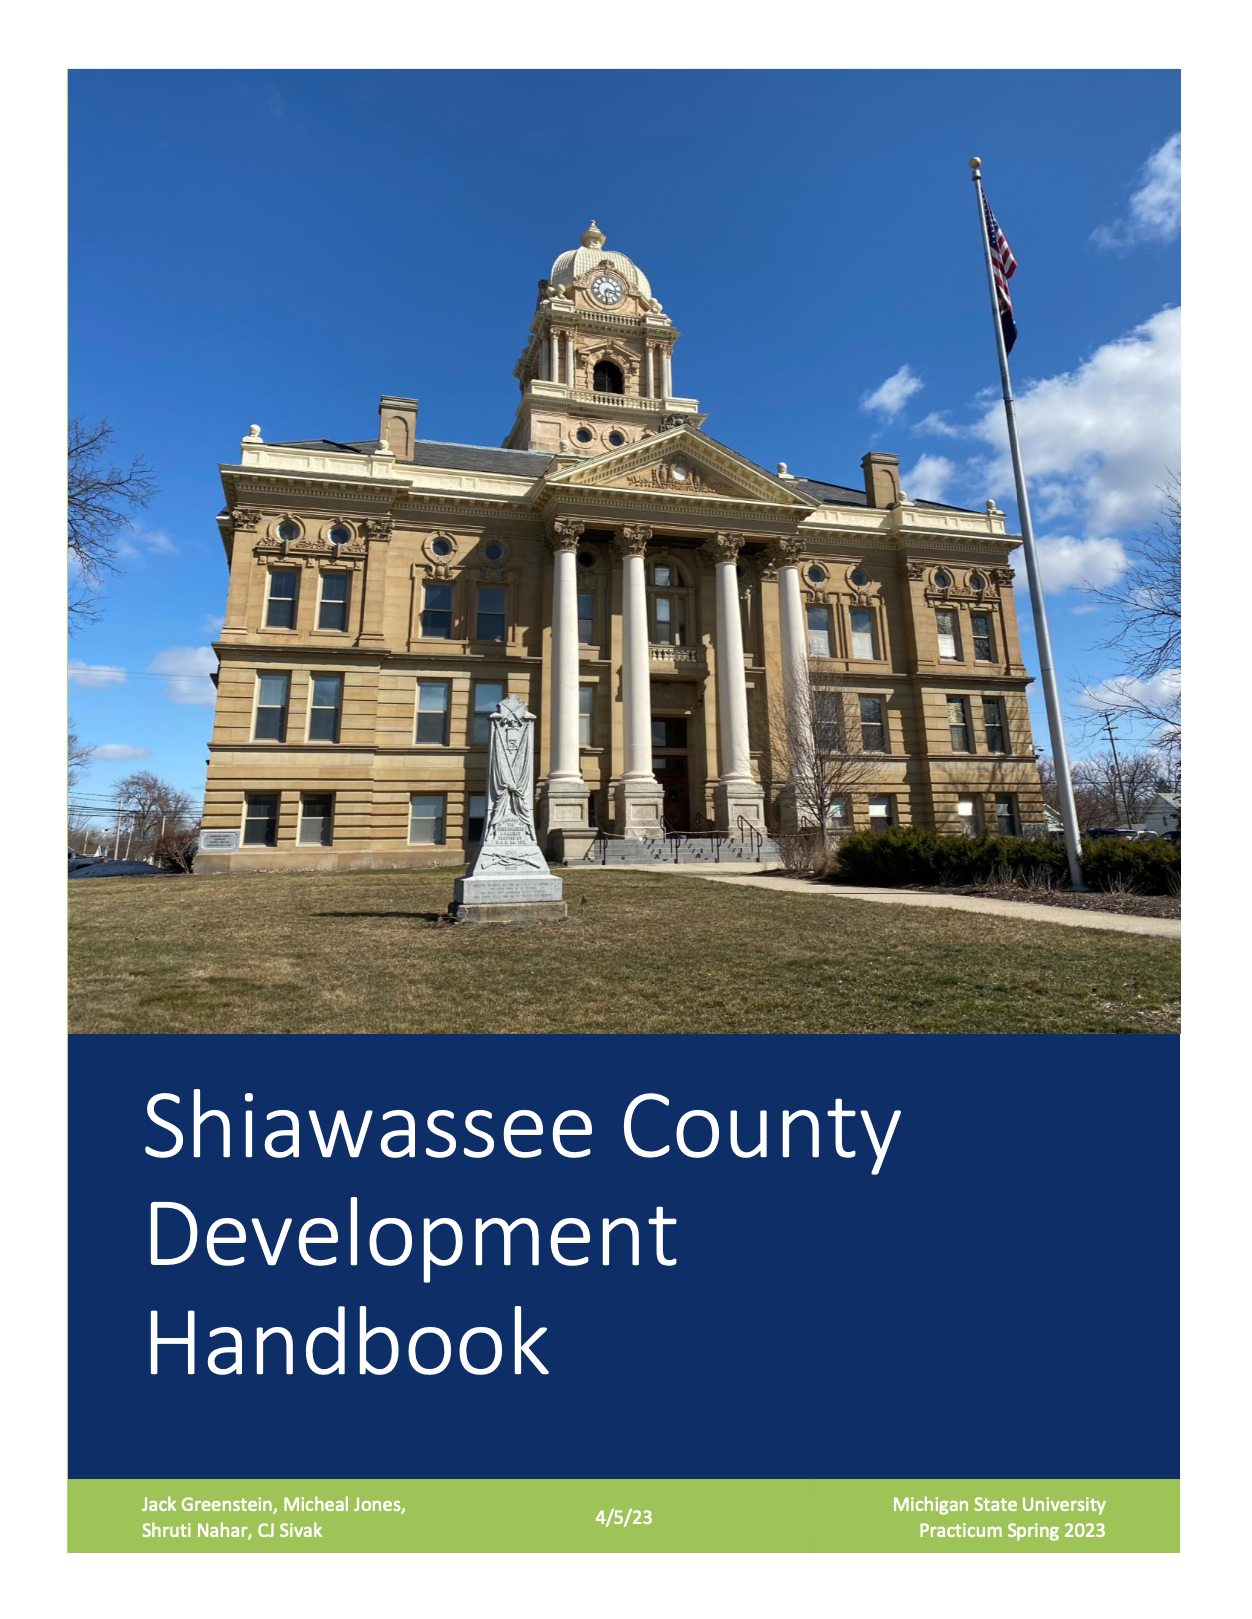 Report for 2023: Shiawassee County Development Handbook